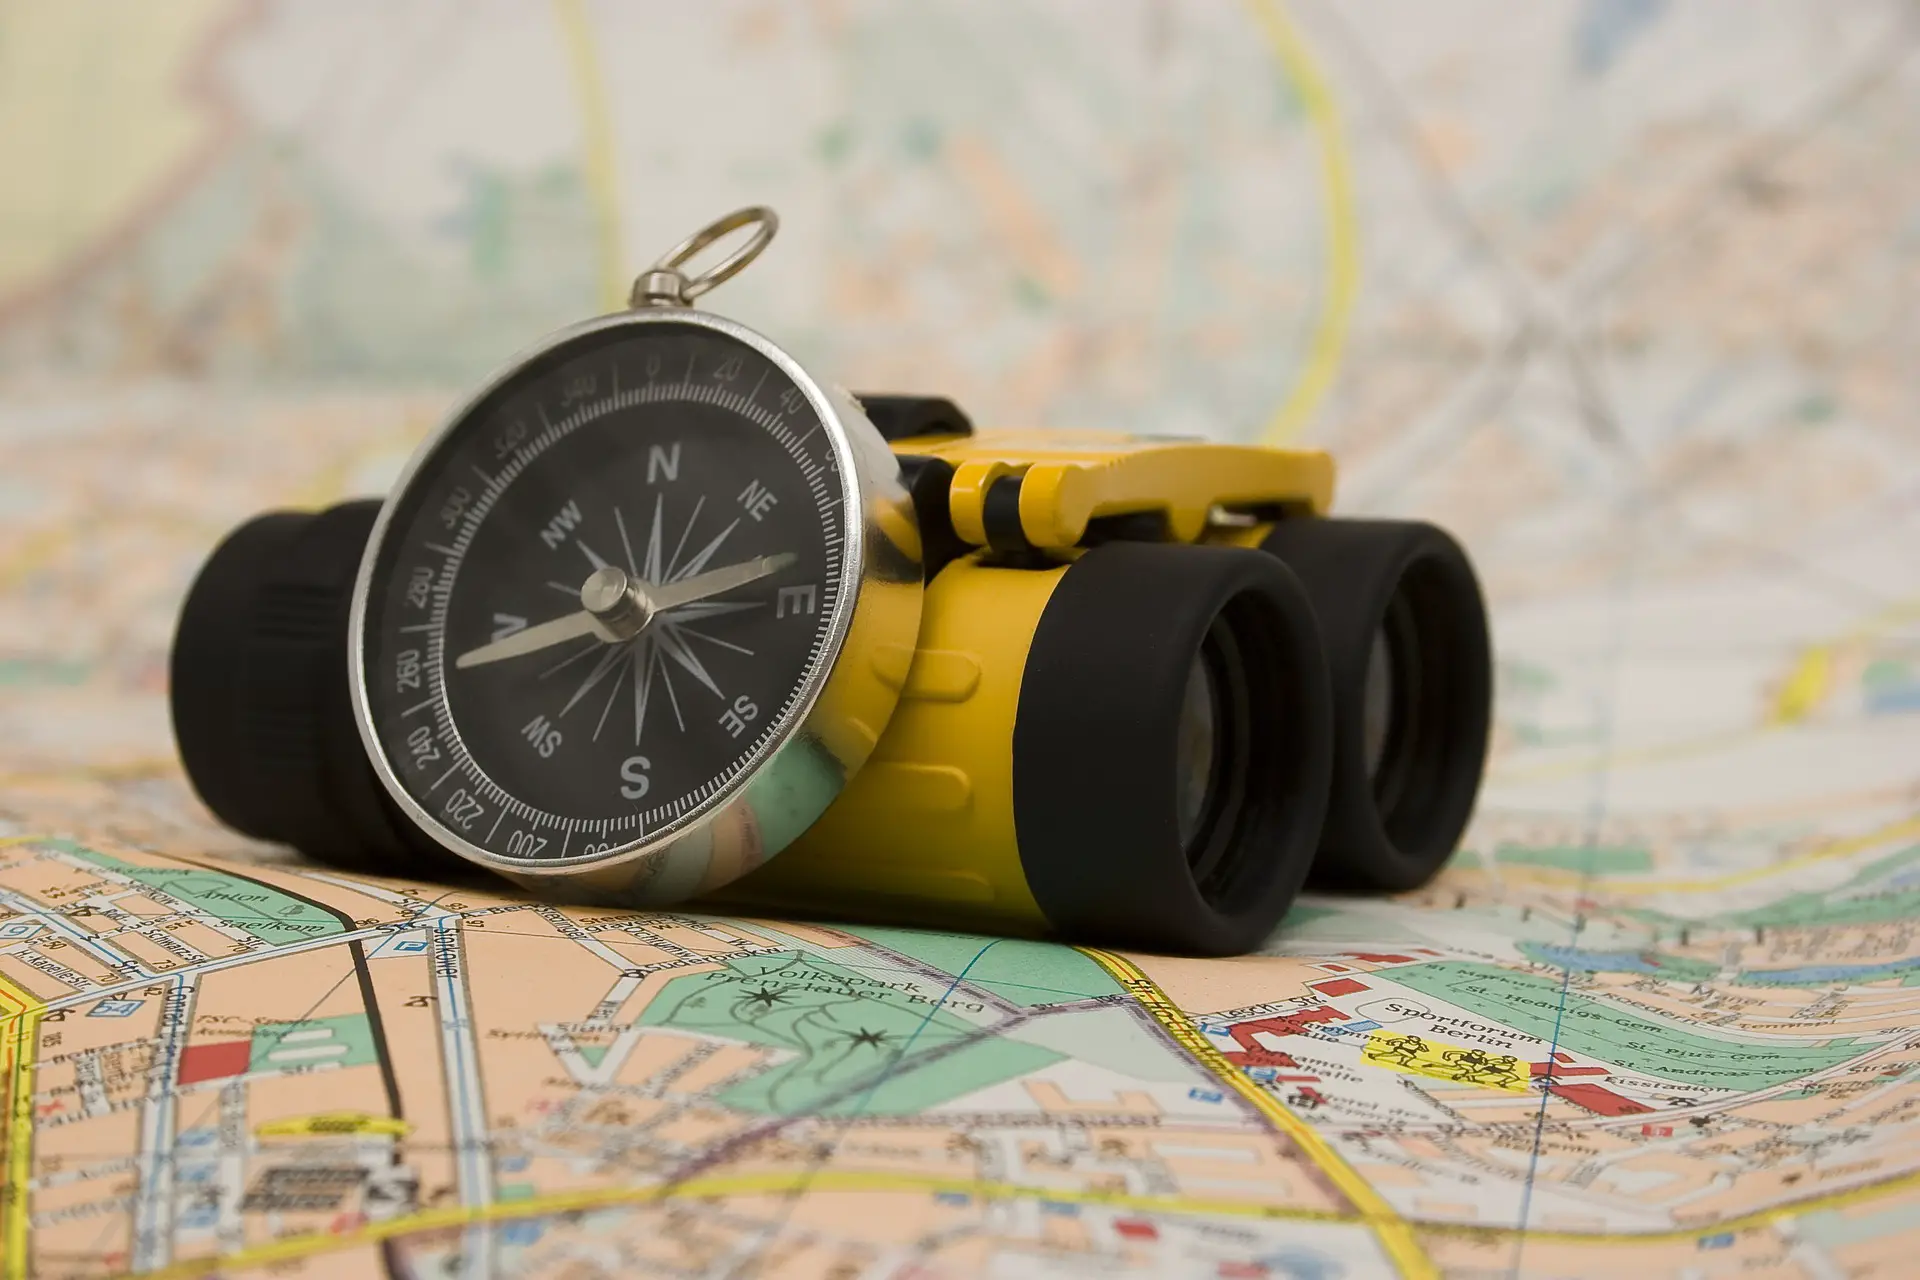 Compass and Rangefinder Binoculars: Purposes, Uses & Benefits